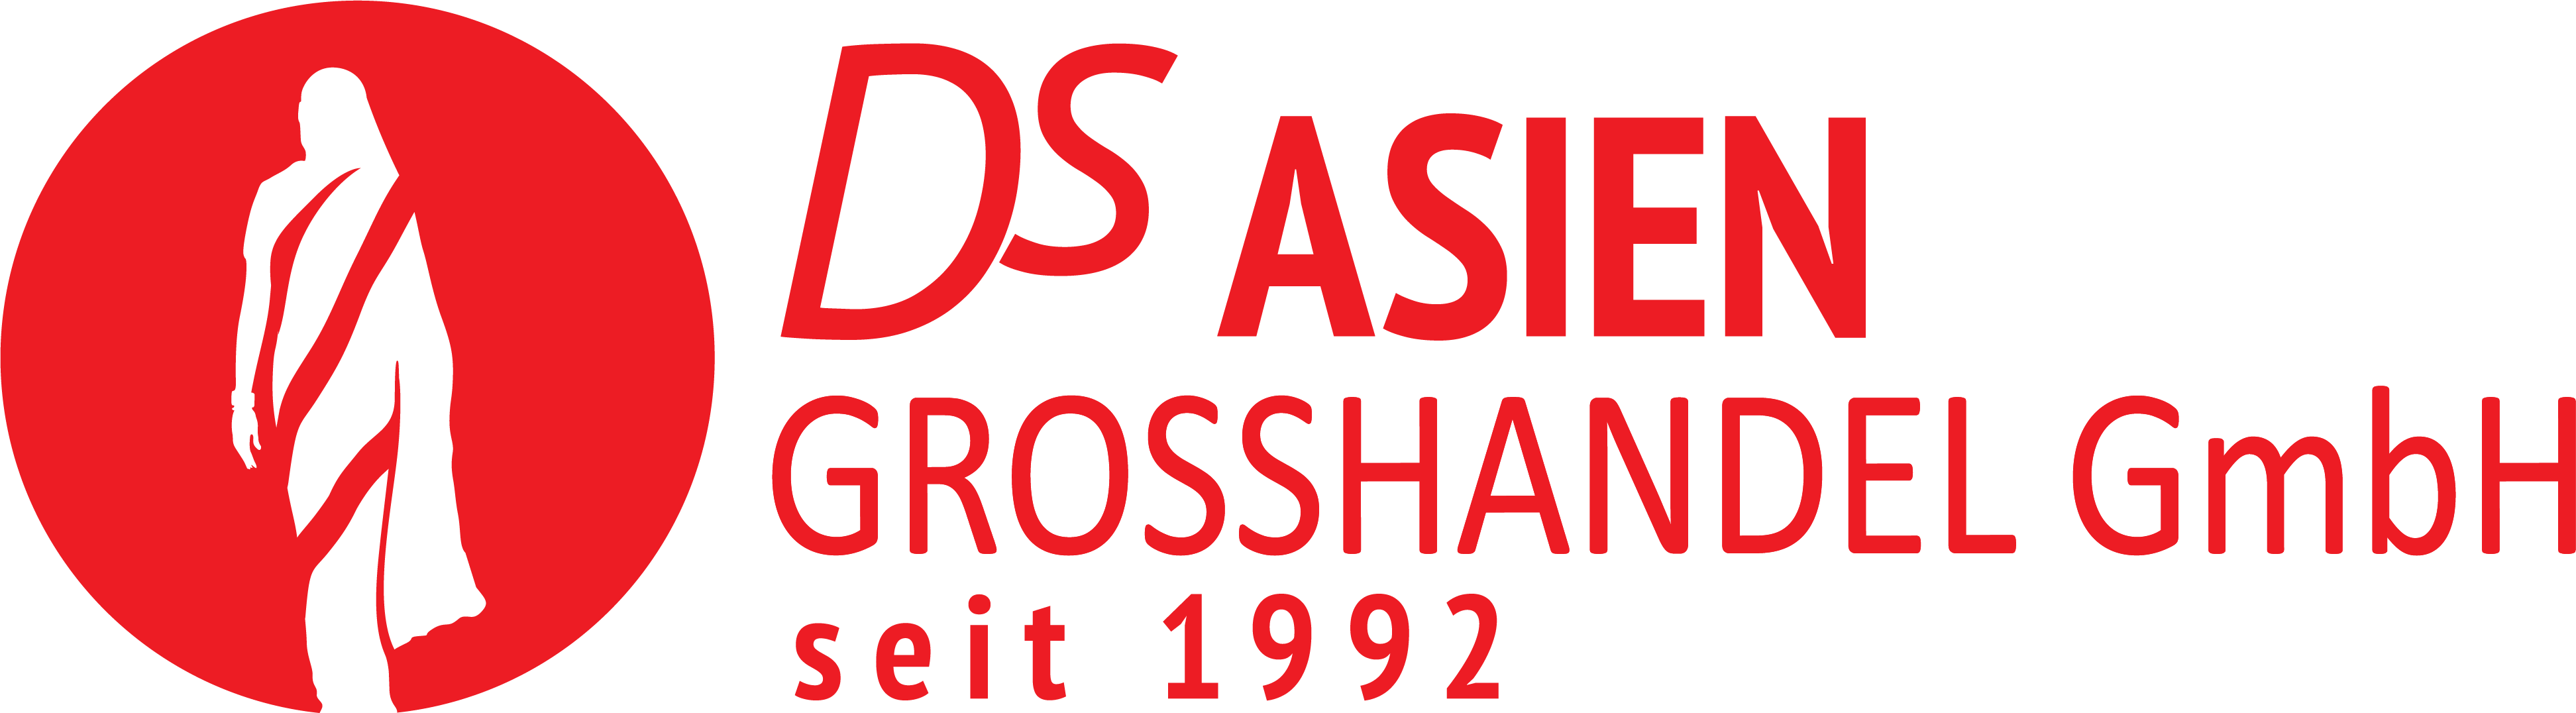 DS Asien grosshandel GmbH